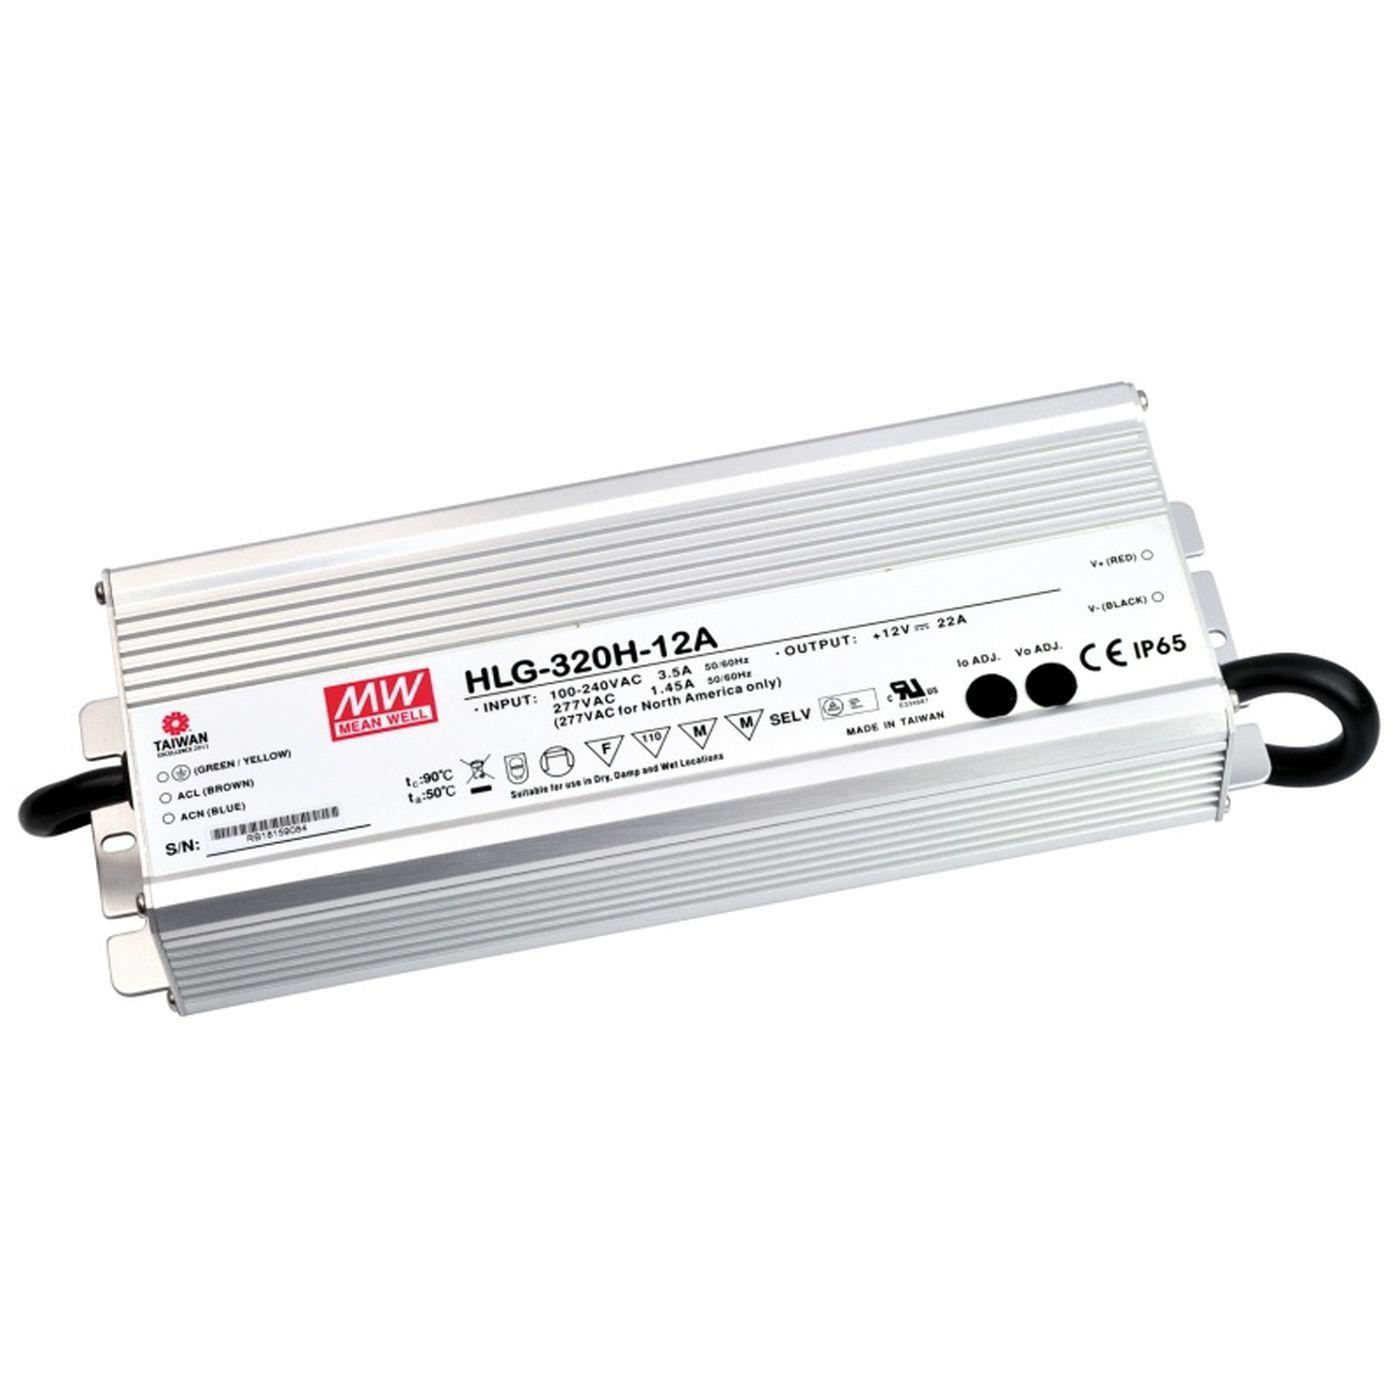 HLG-320H-15A 285W 15V 19A LED Netzteil Trafo Treiber IP65